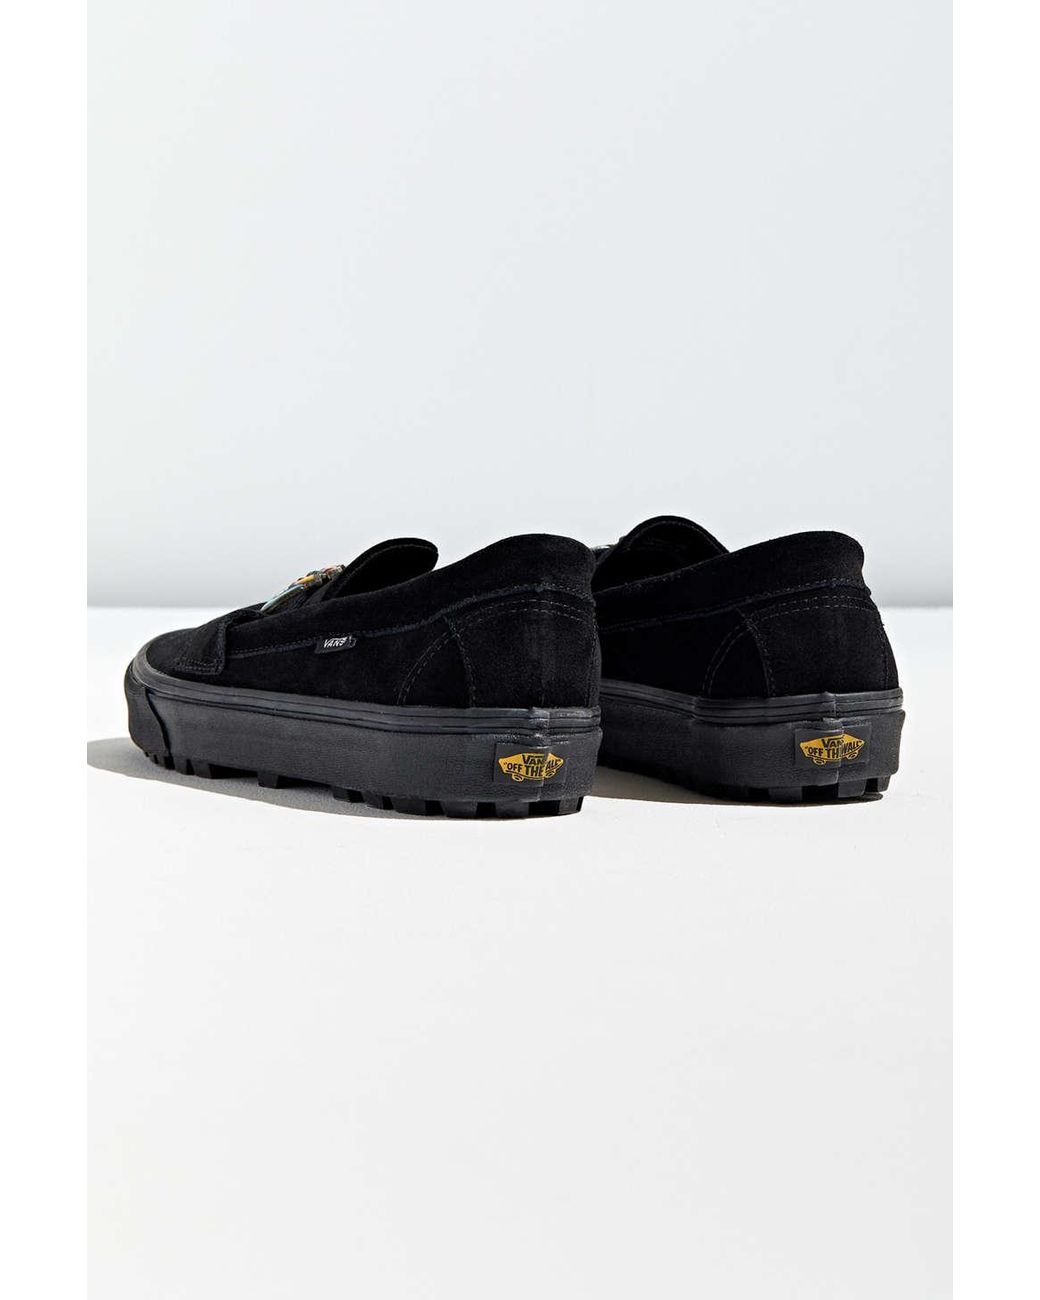 Men's Black Vans X Vivienne Westwood Style 53 Orb Shoe